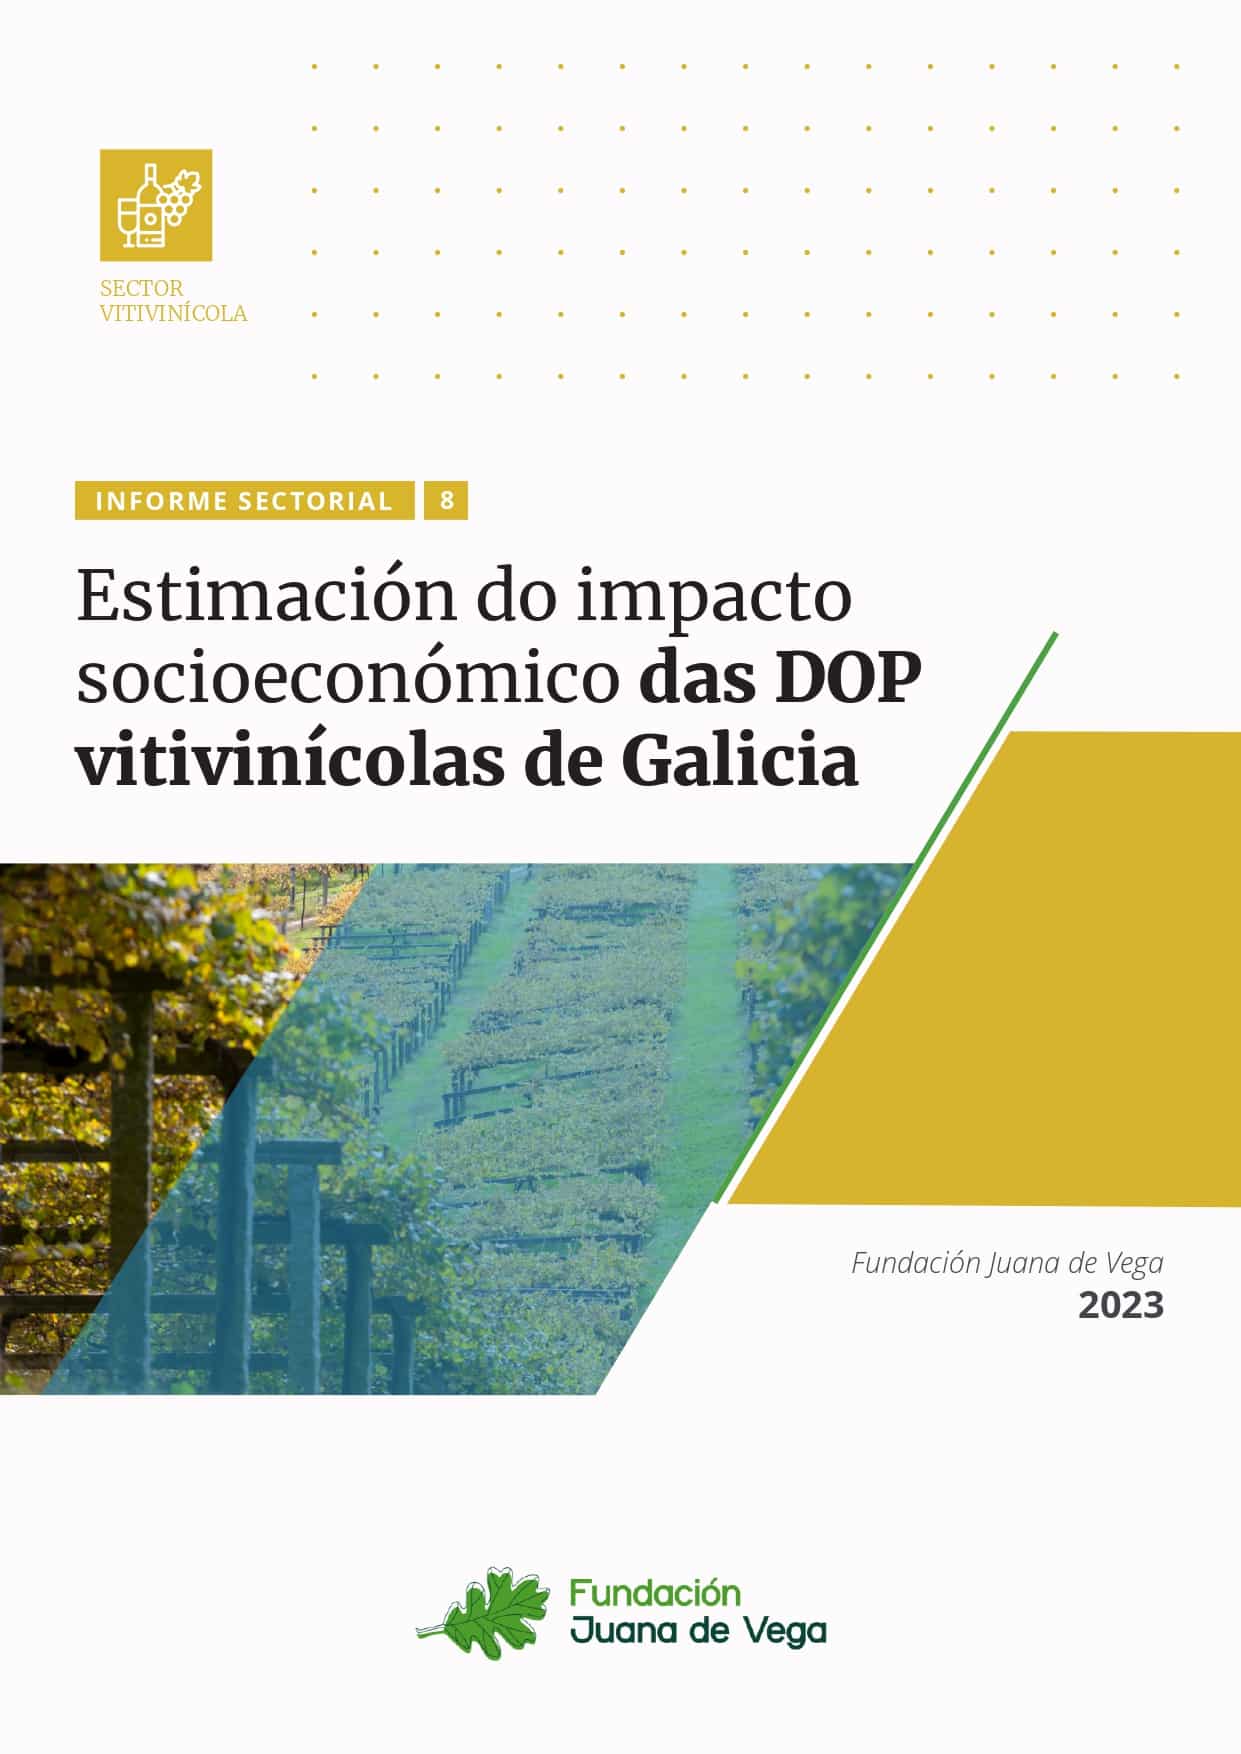 Informe sectorial Fundación Juana de Vega. Estimación do impacto socioeconómico das DOP vitivinícolas de Galicia_portada